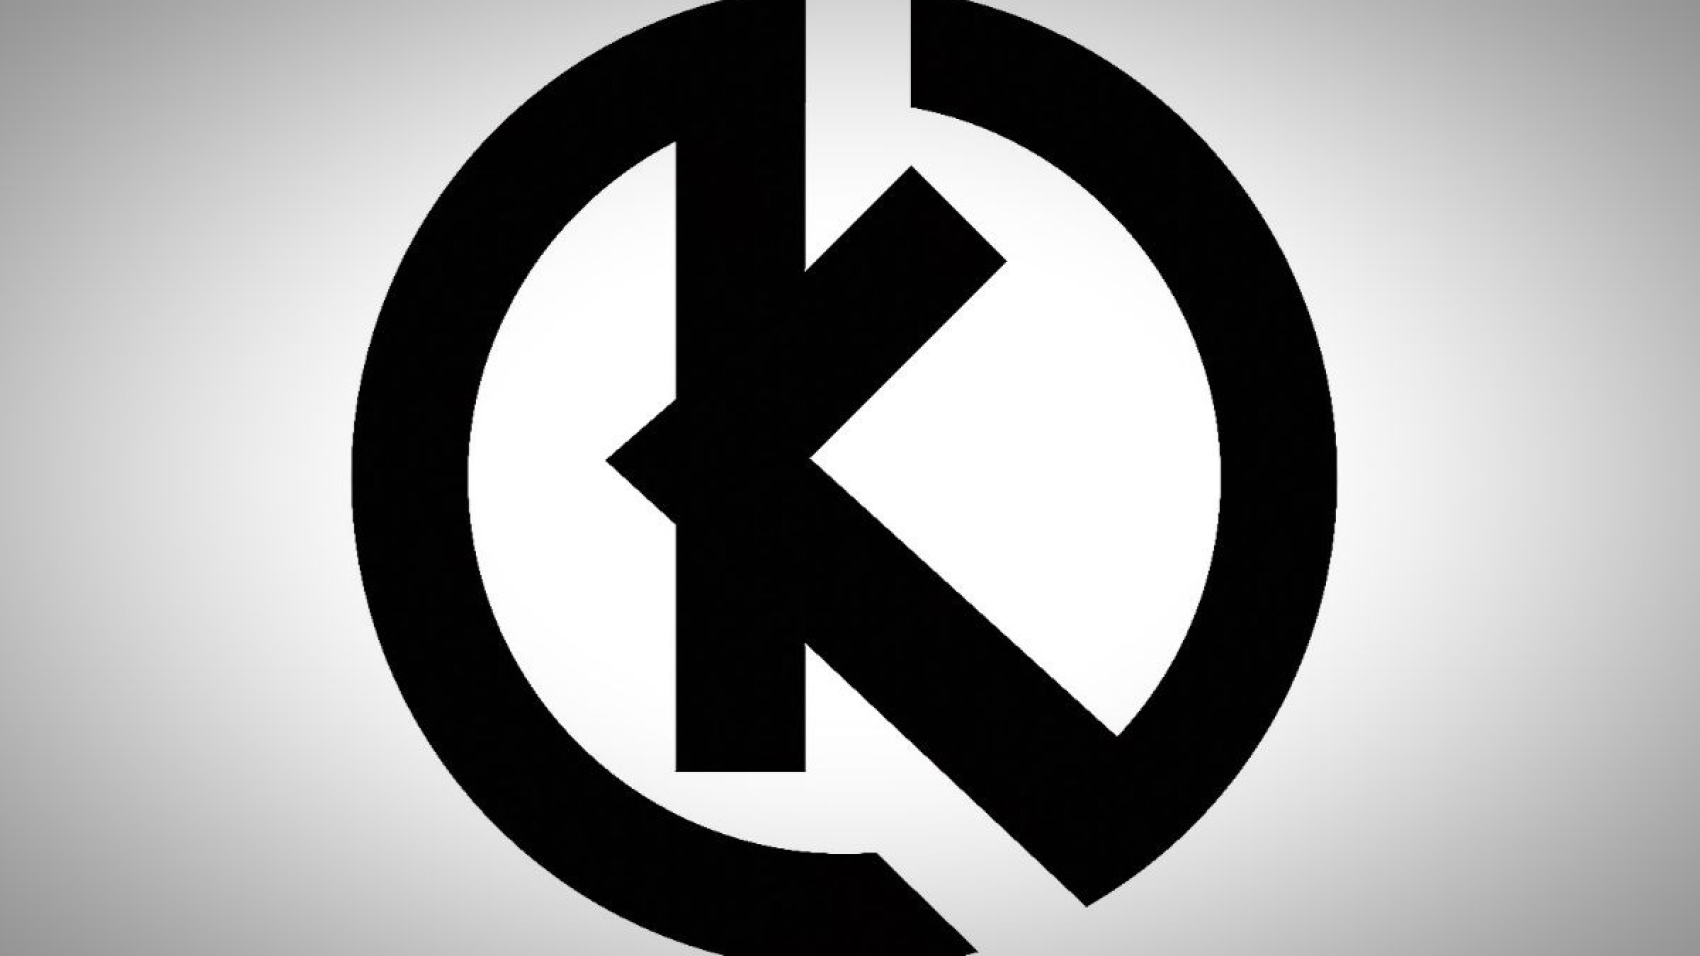 k_logo (3)